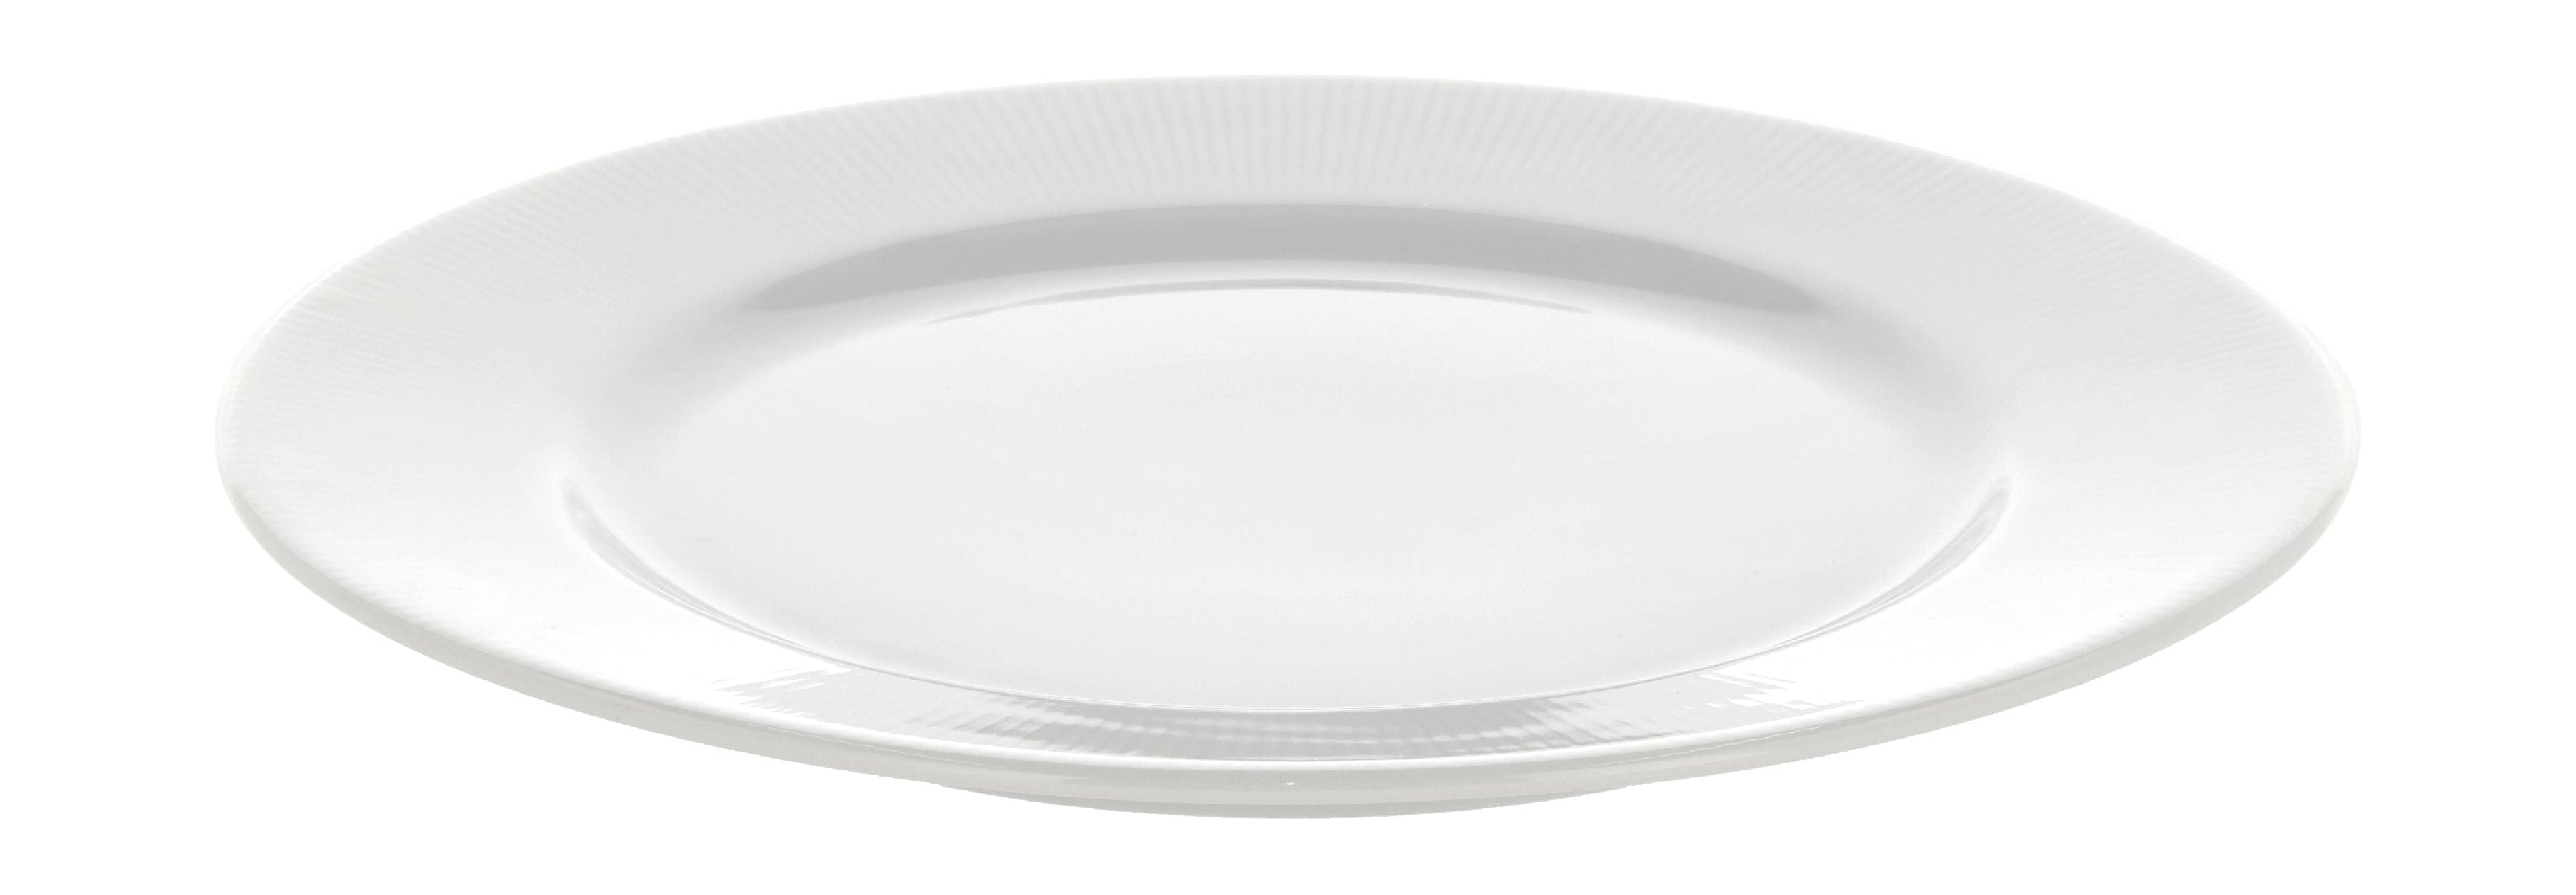 Pillivuyt Eventail Flat Plate mit Rand Ø22 cm, weiß